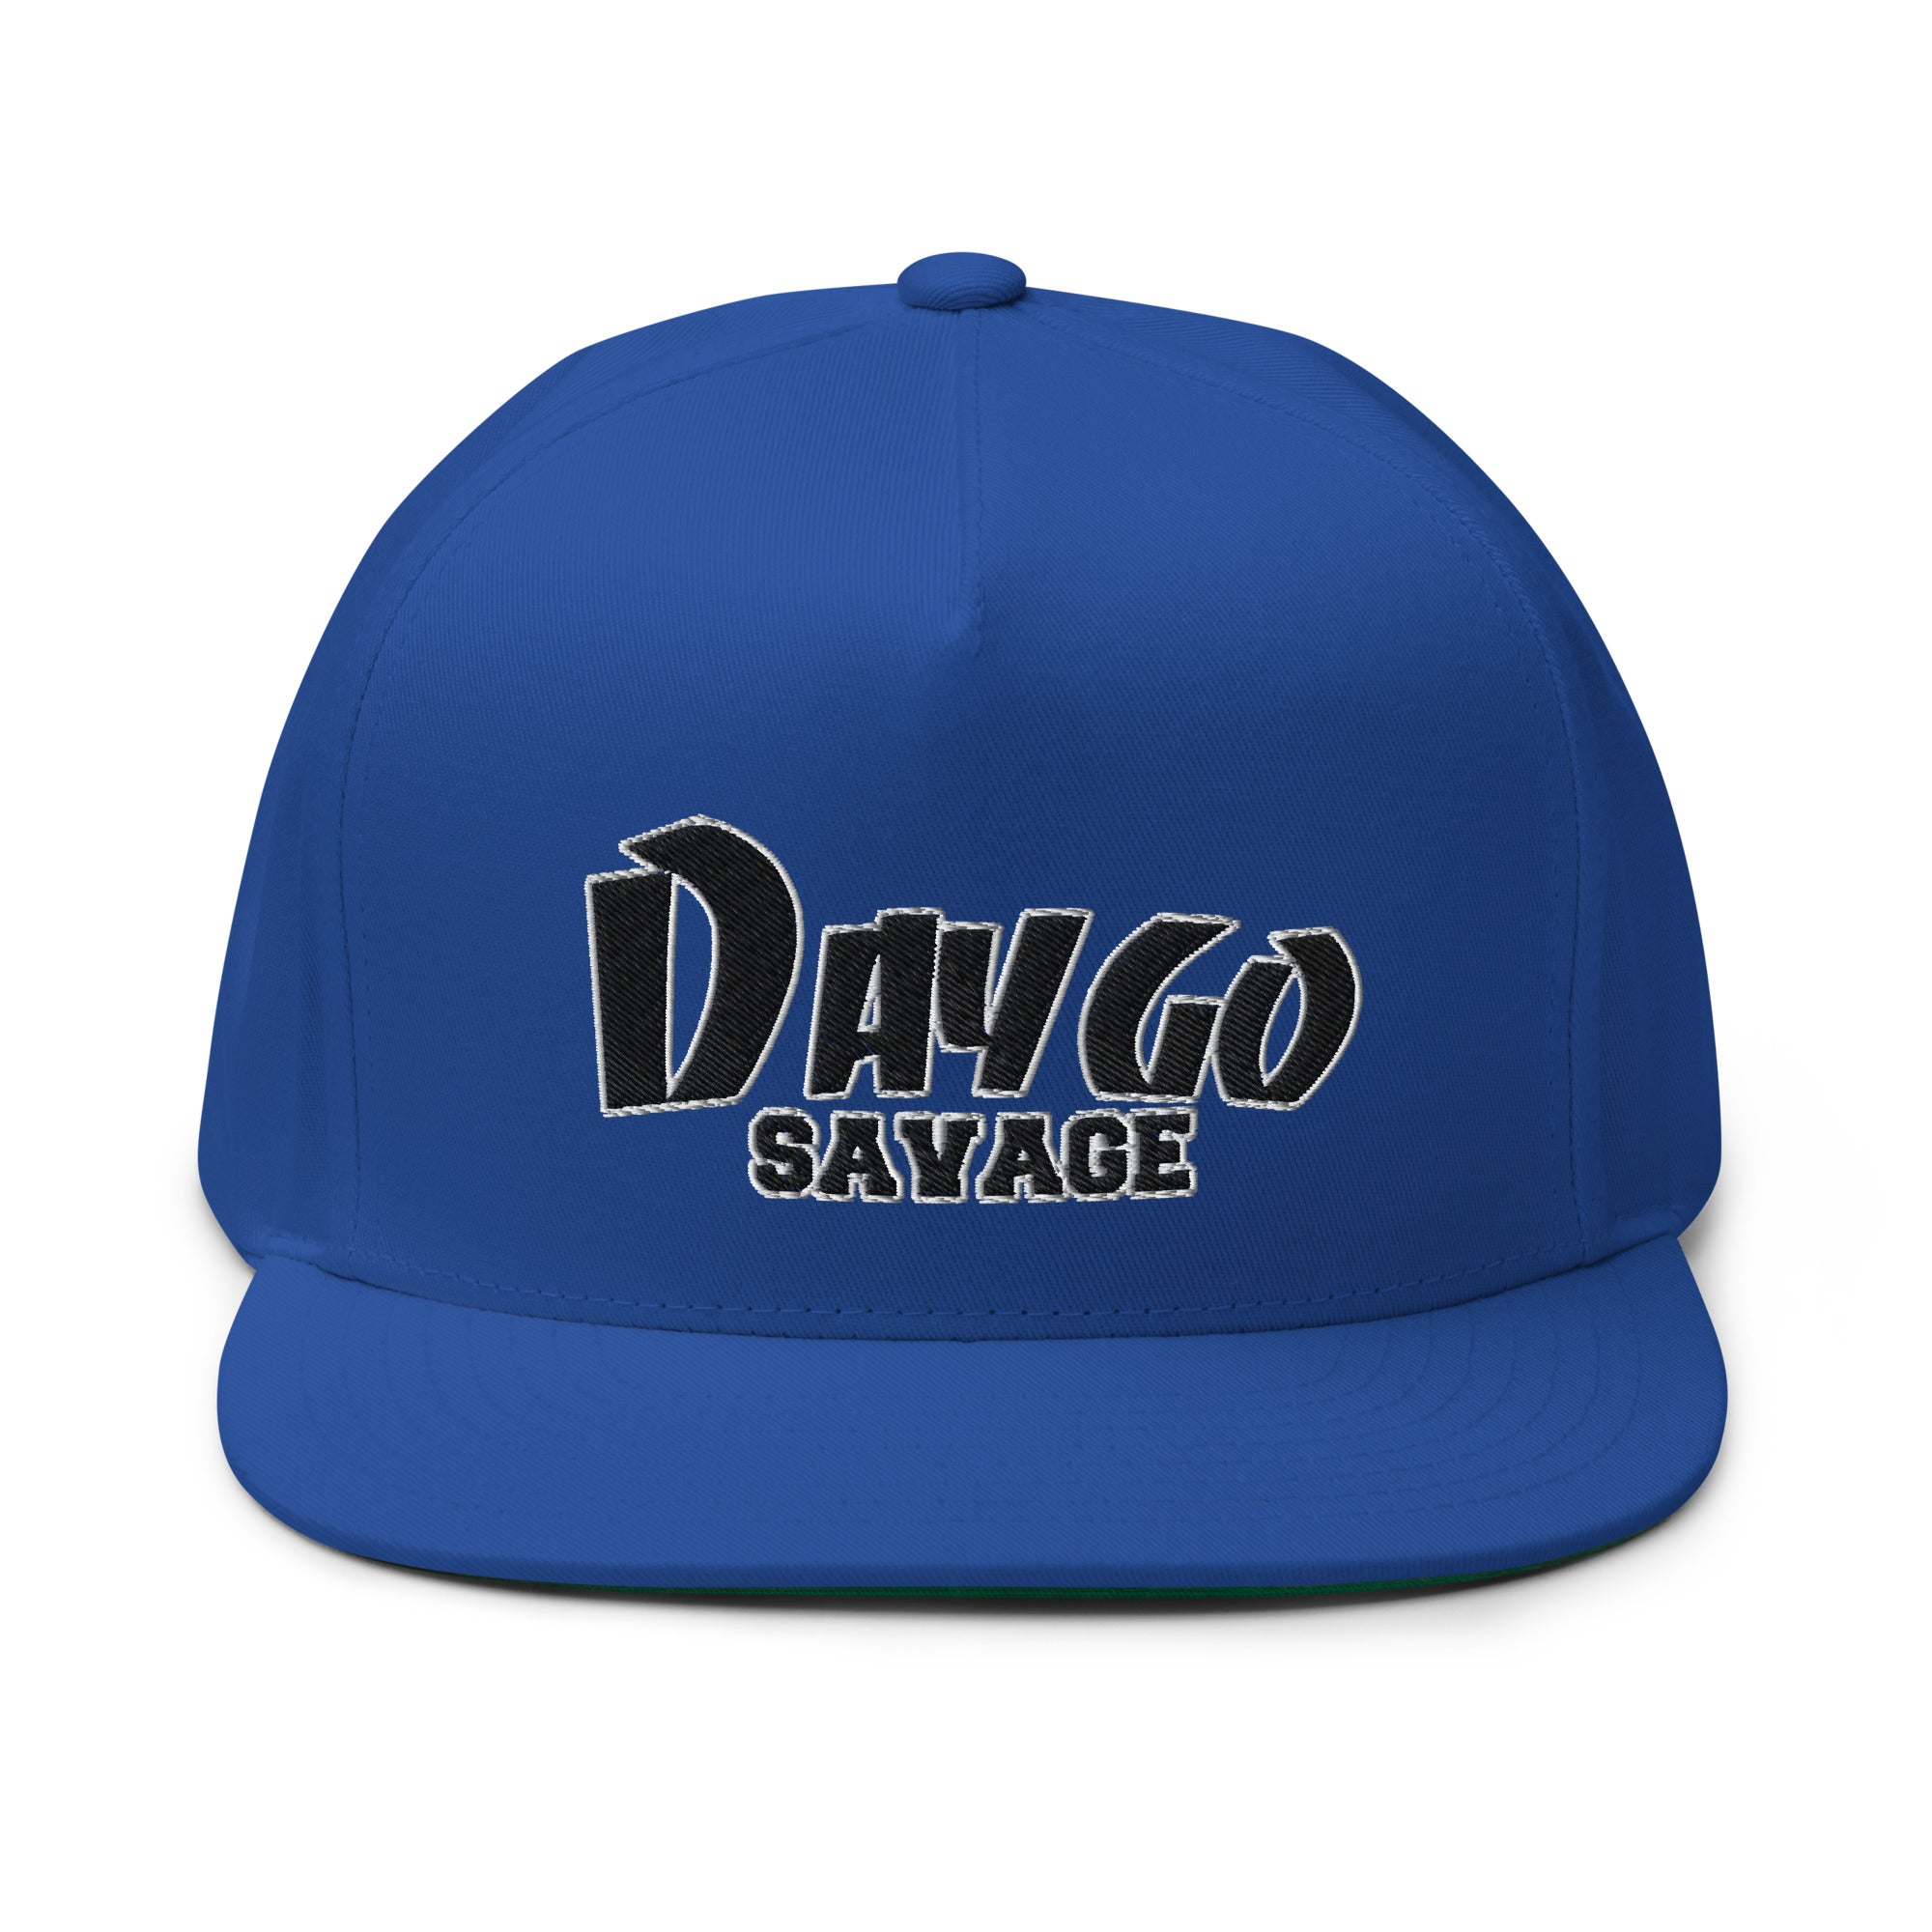 Daygo Savage Snapback